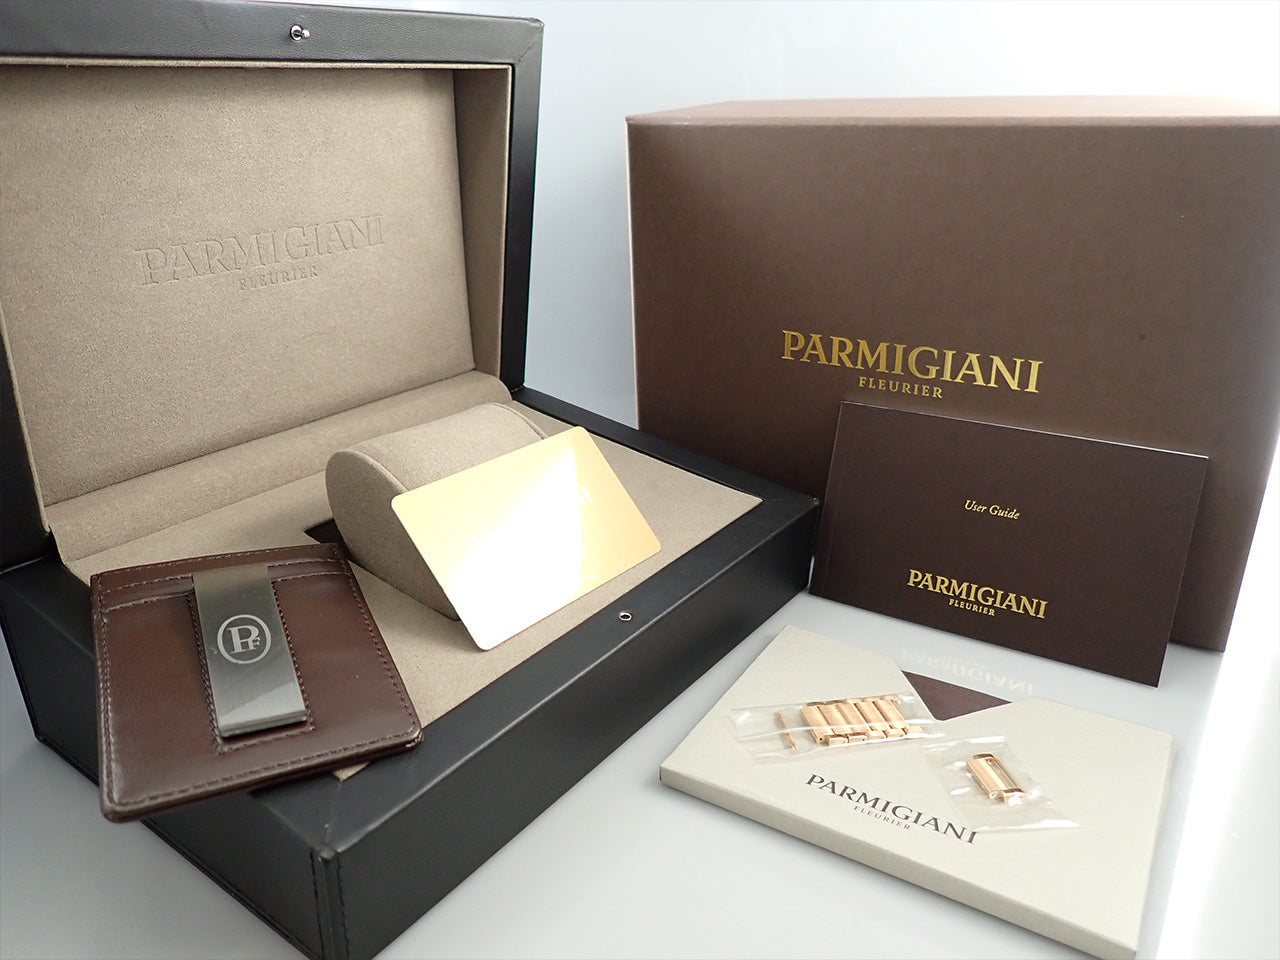 Parmigiani Fleurier Tonda PF Micro Rotor &lt;Warranty, Box, etc.&gt;